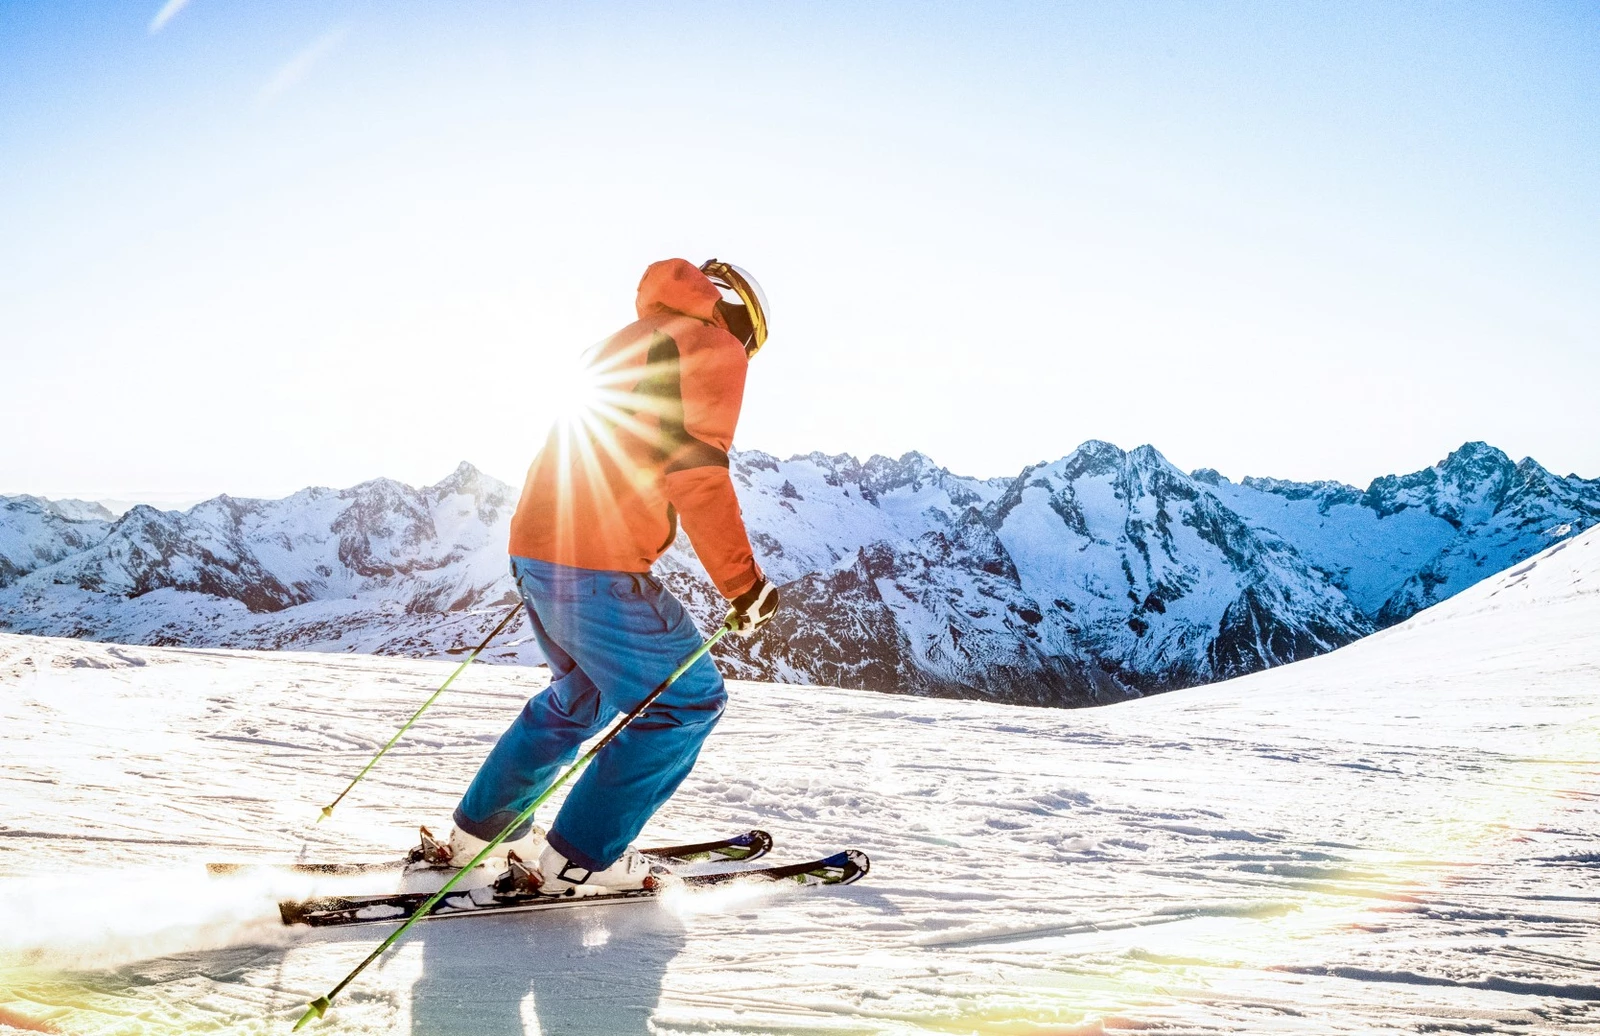 professional-skier-athlete-skiing-at-sunset-on-top-2022-12-09-04-45-30-utc (Large)